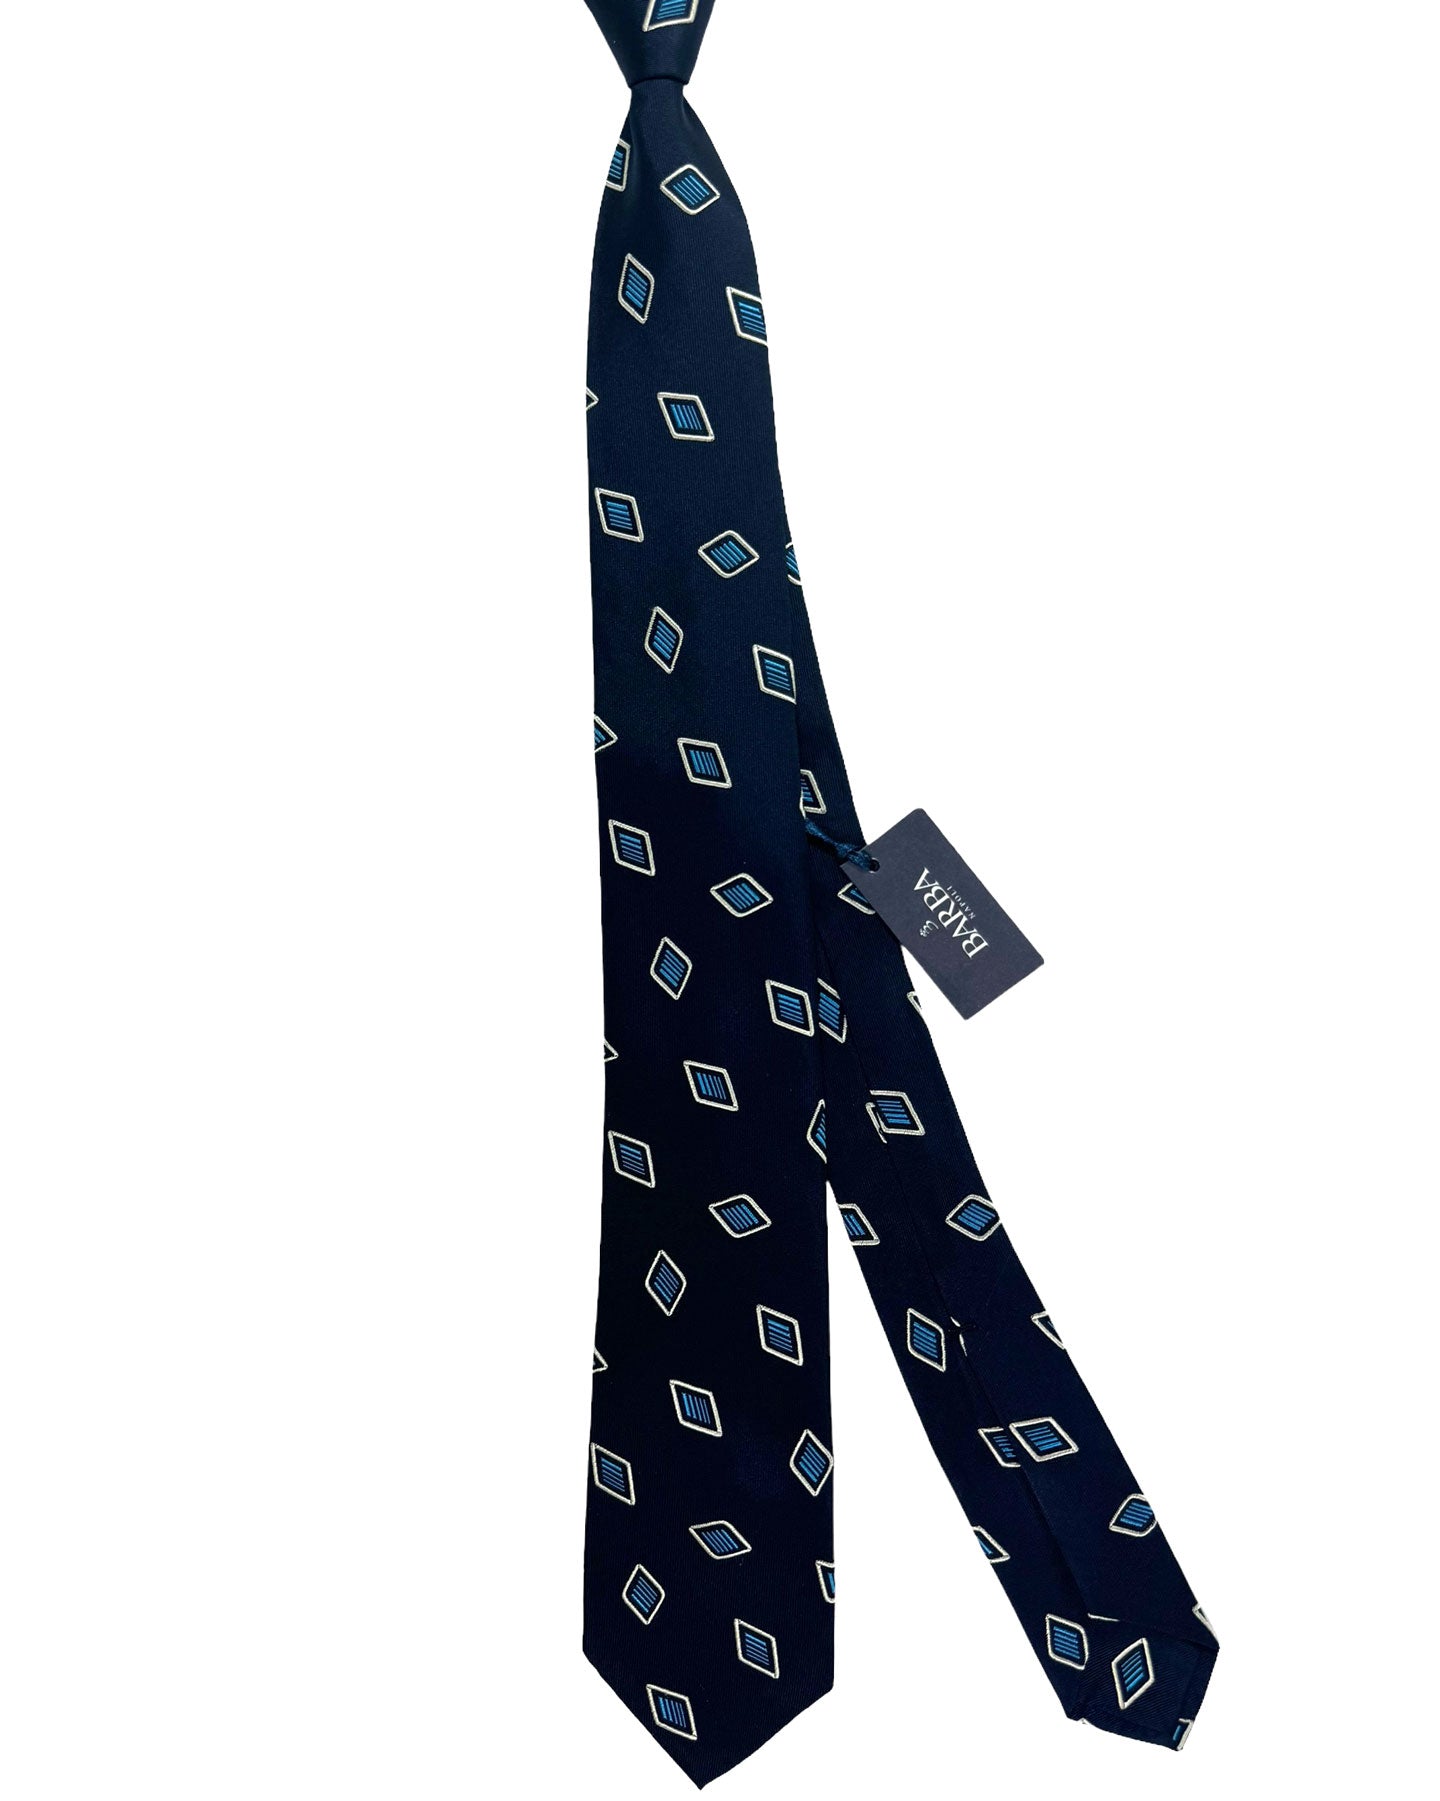 Barba Sevenfold Tie Navy Aqua Blue Diamonds Design - Sartorial Neckwear